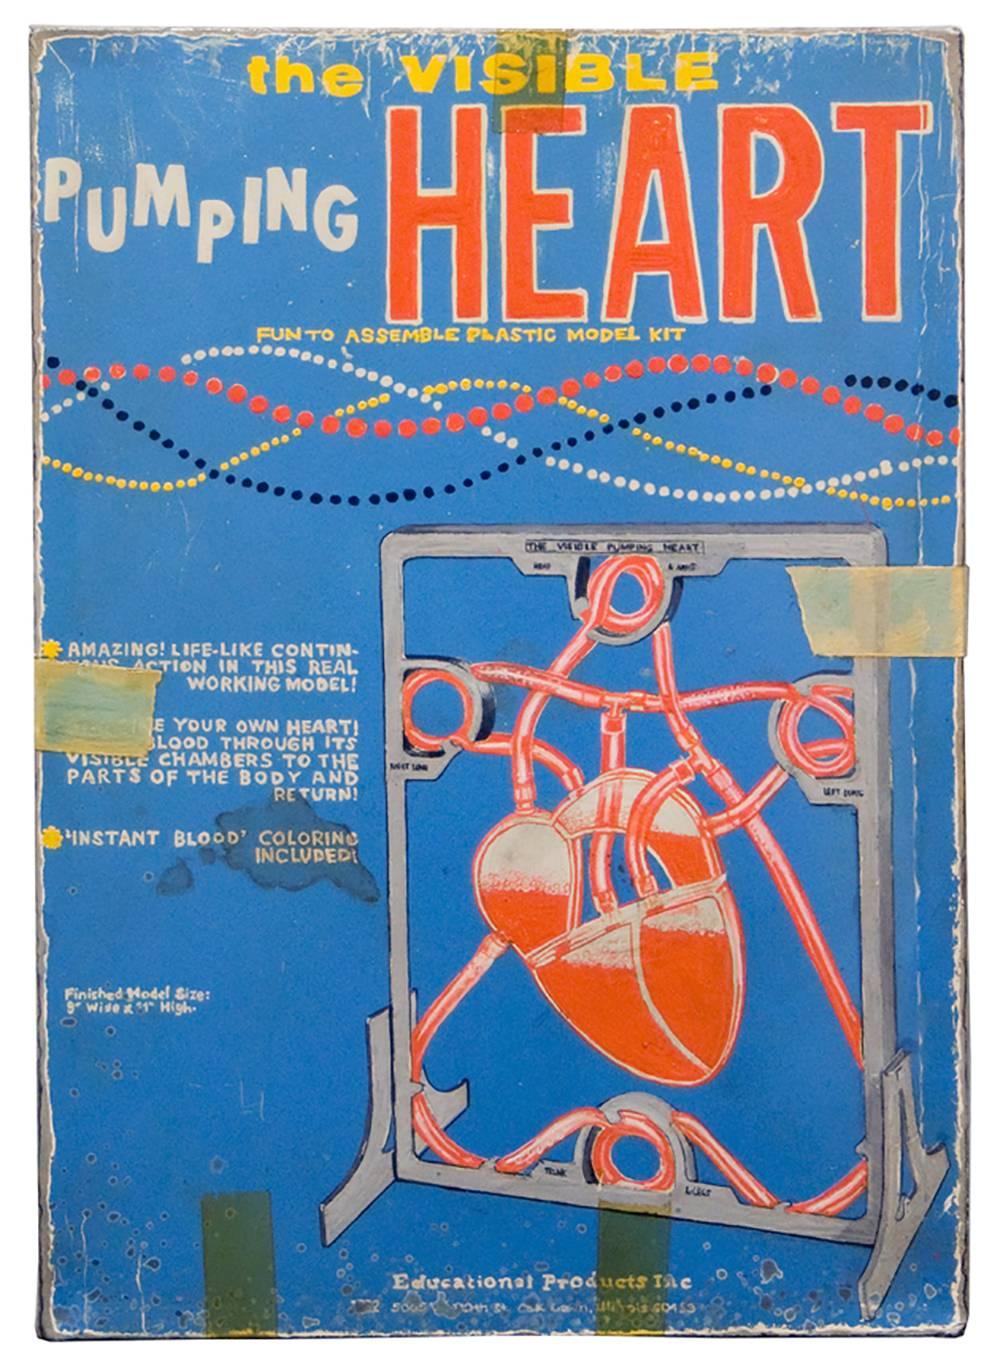 circa 1955 Pumping Heart - Mixed Media Art by Tim Liddy